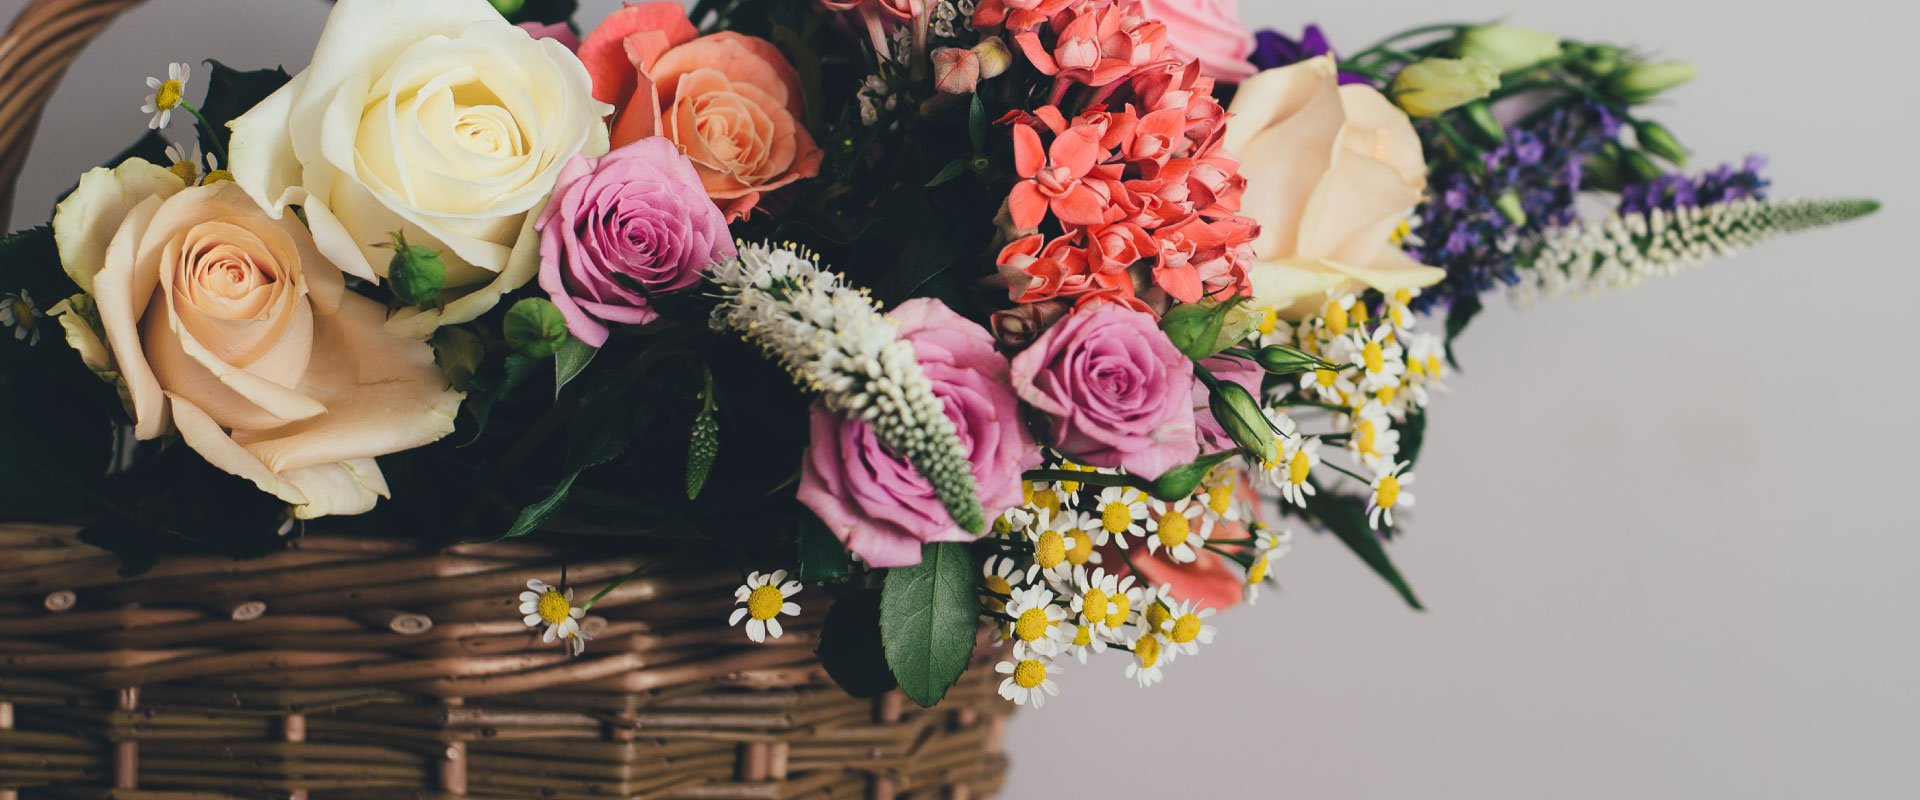 Tips for Flower Shops for Upselling Gift Baskets